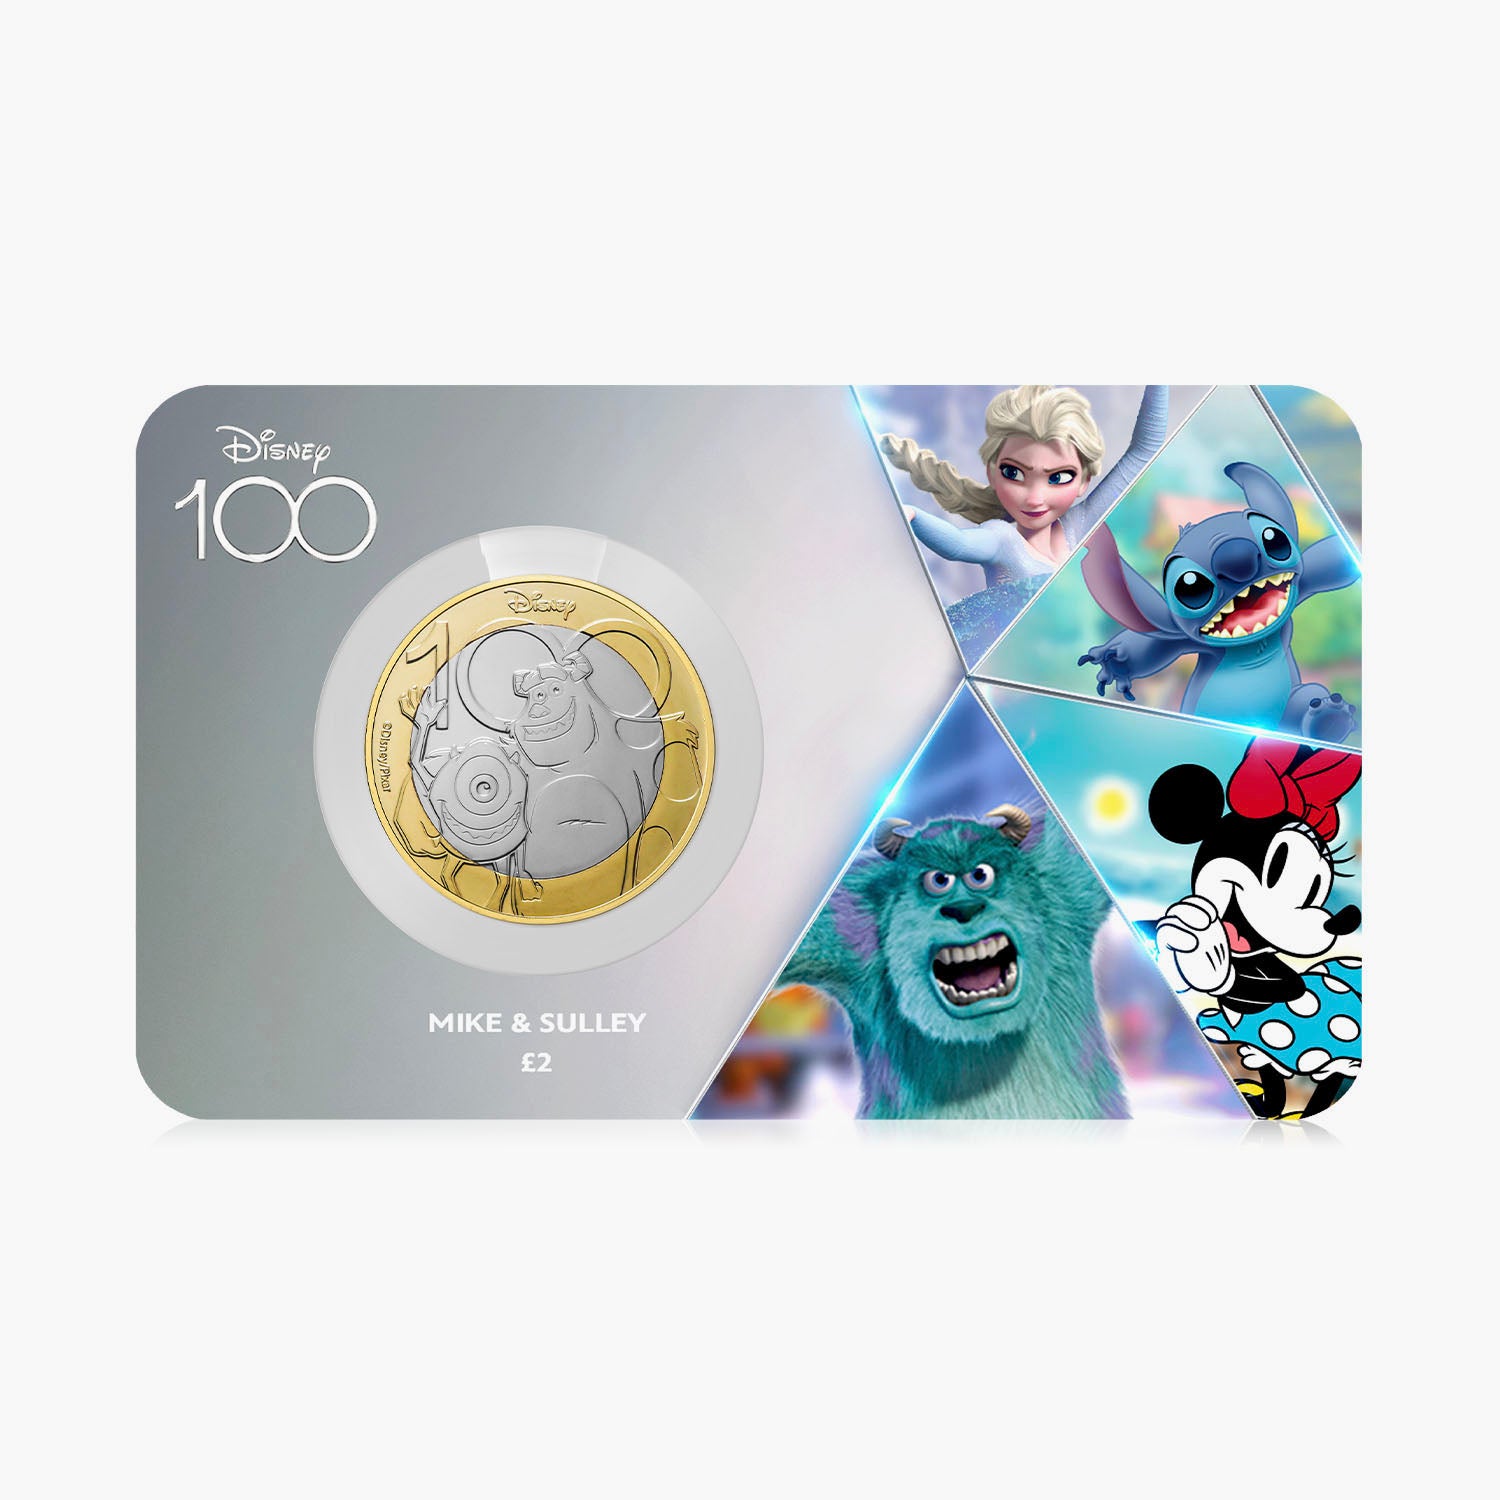 Disney 100th Anniversary Monsters Inc 2023 Â£2 BU Coin